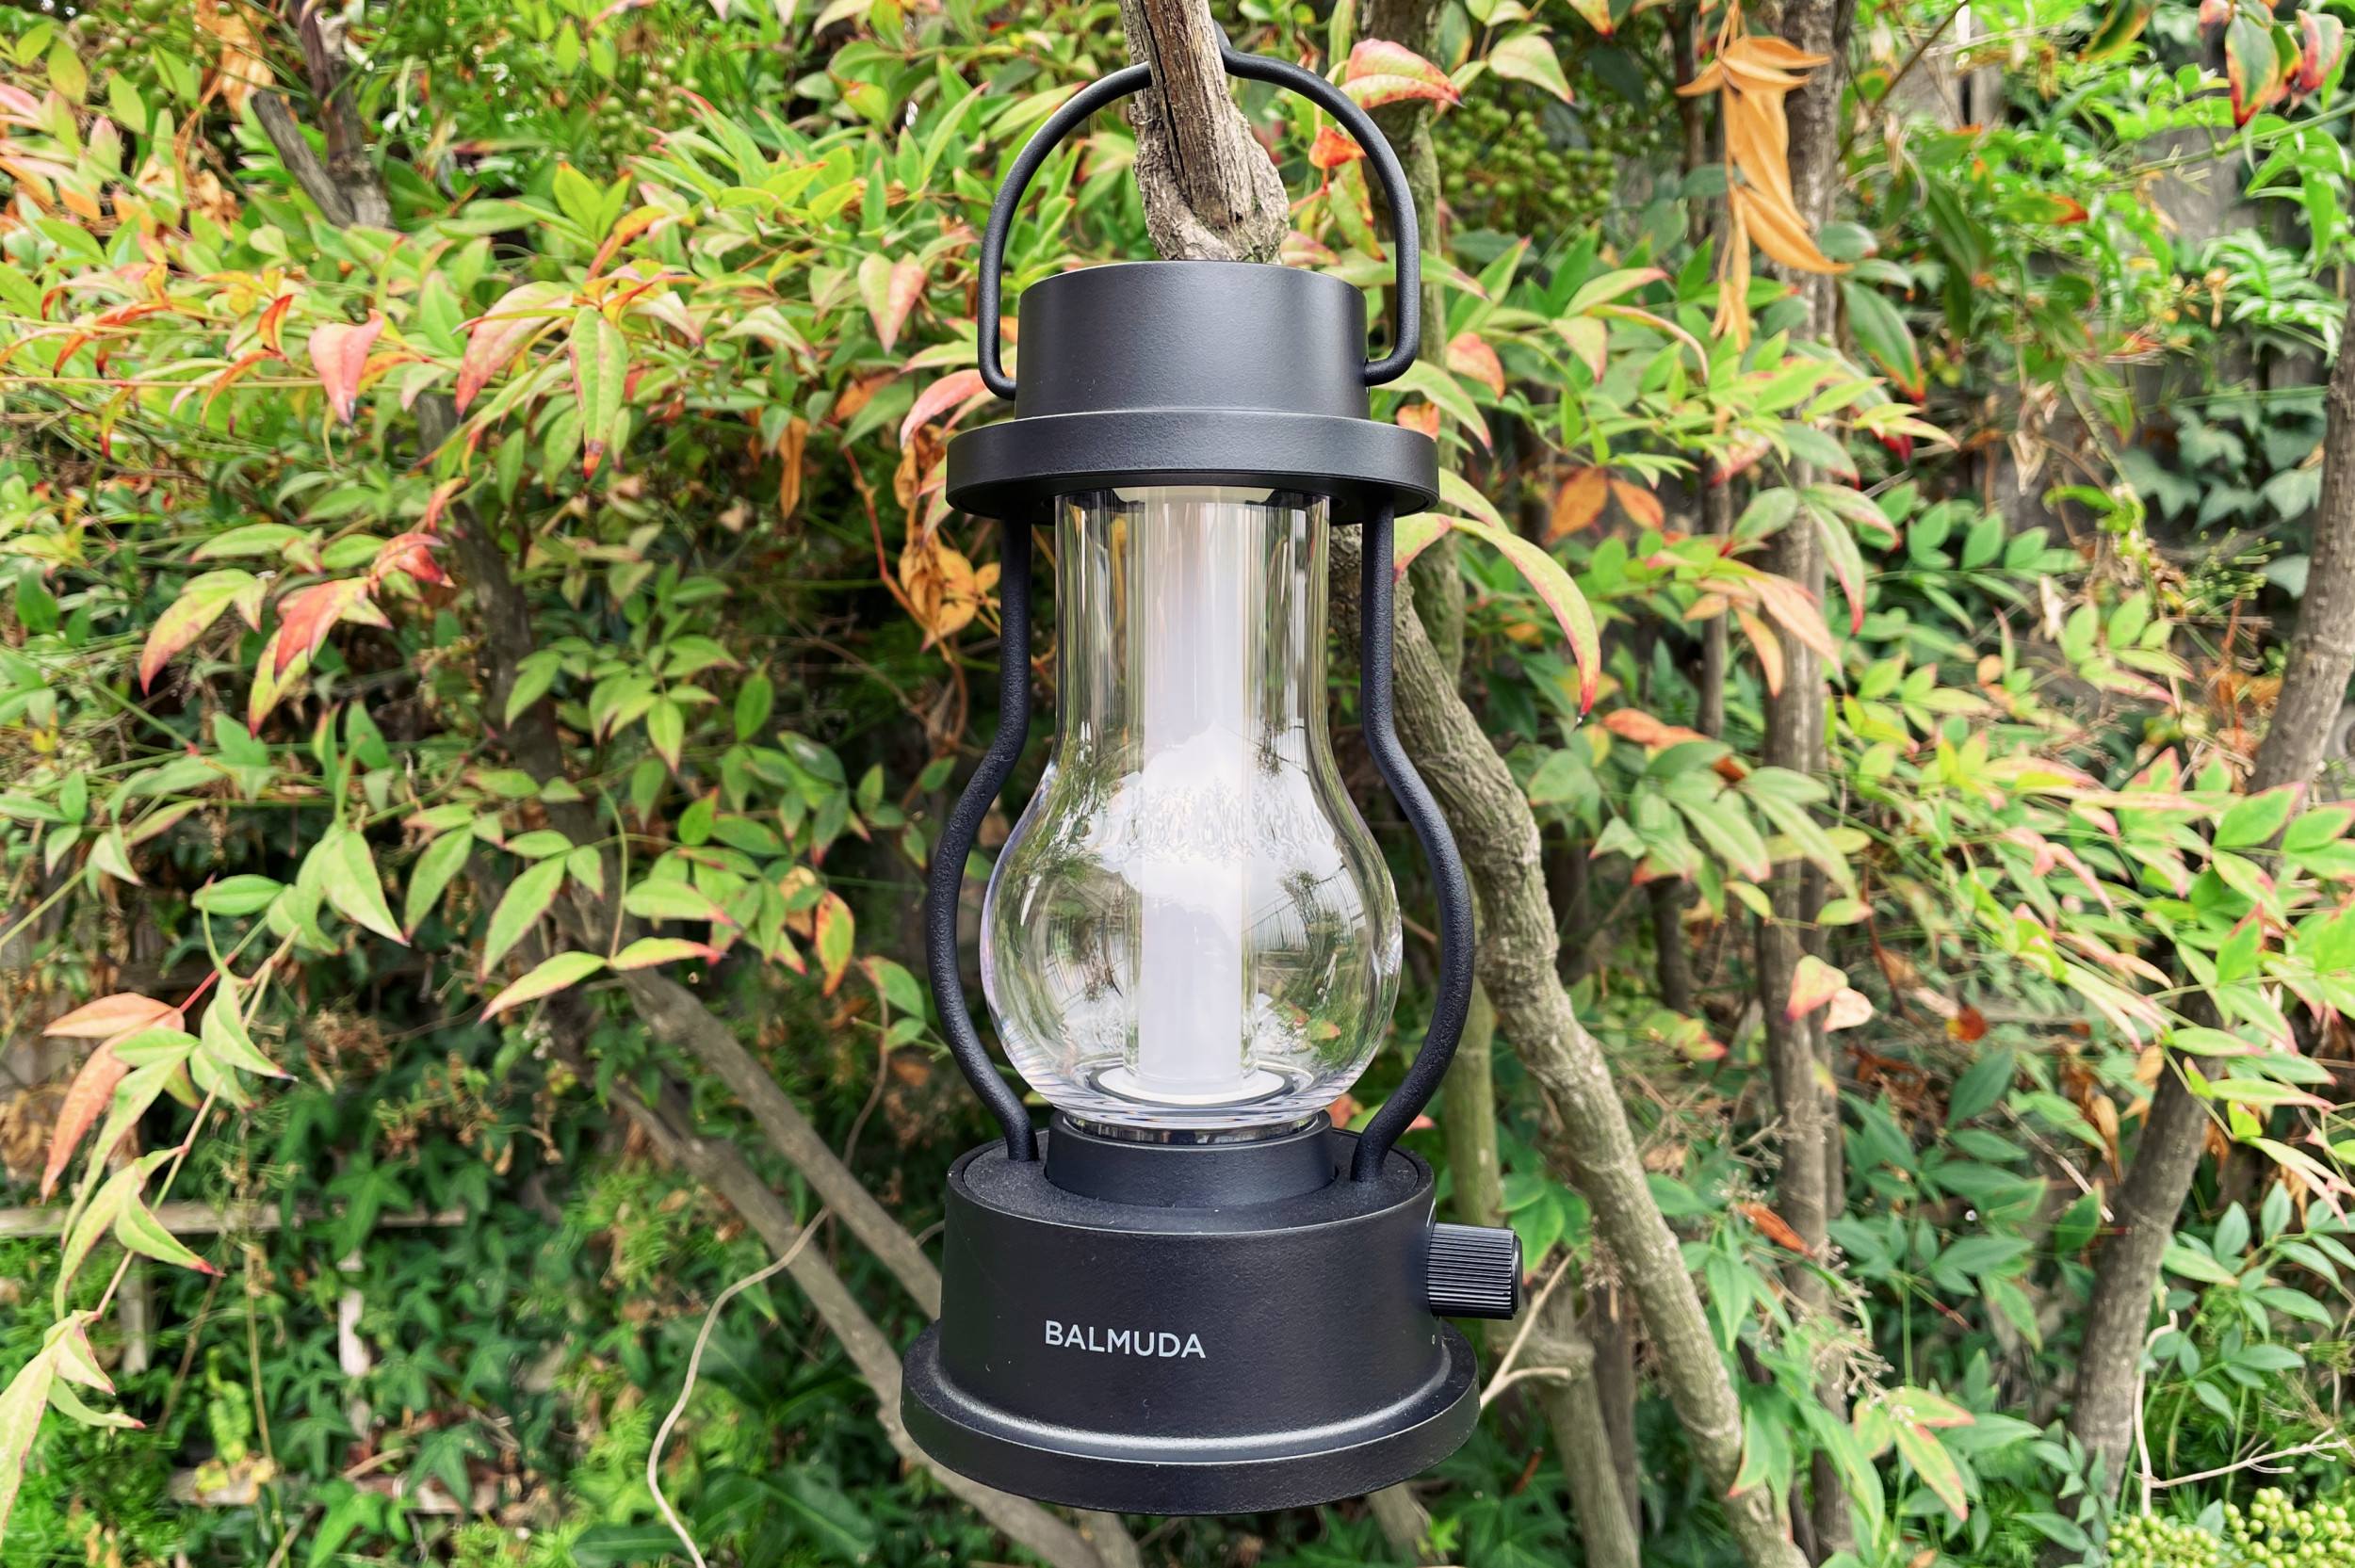 Balmuda Lantern Review: A Designer Light that Works Outdoors